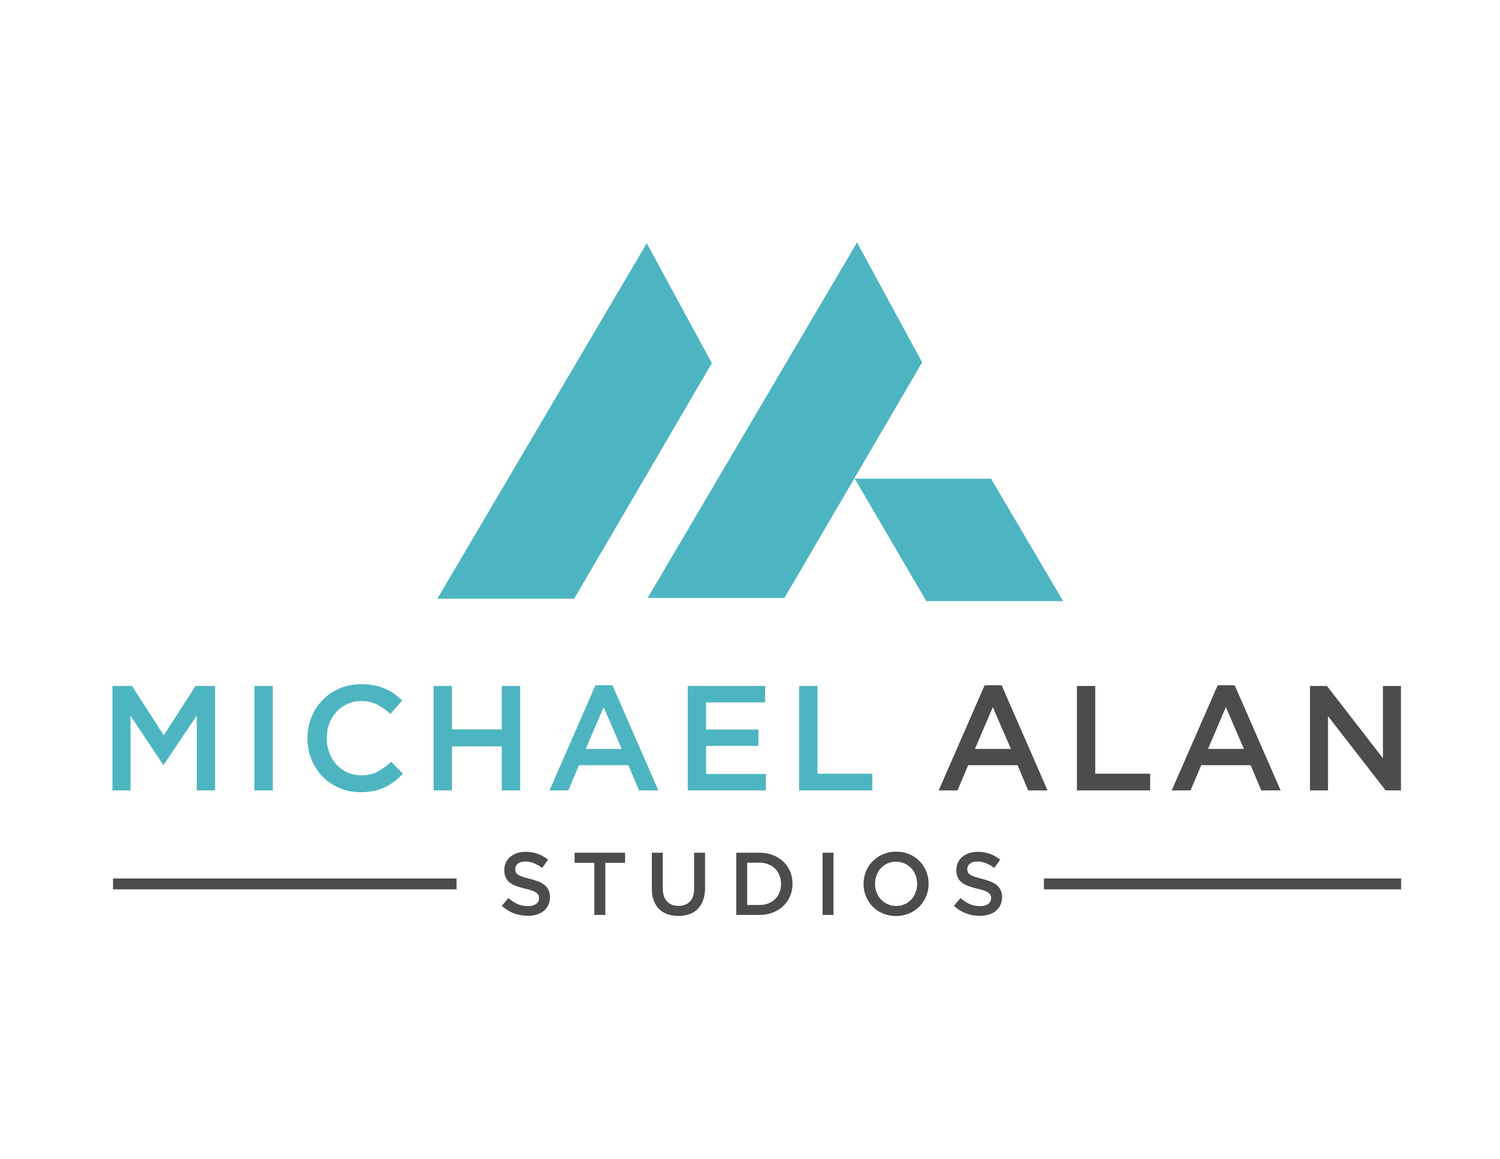 Michael Alan Studios